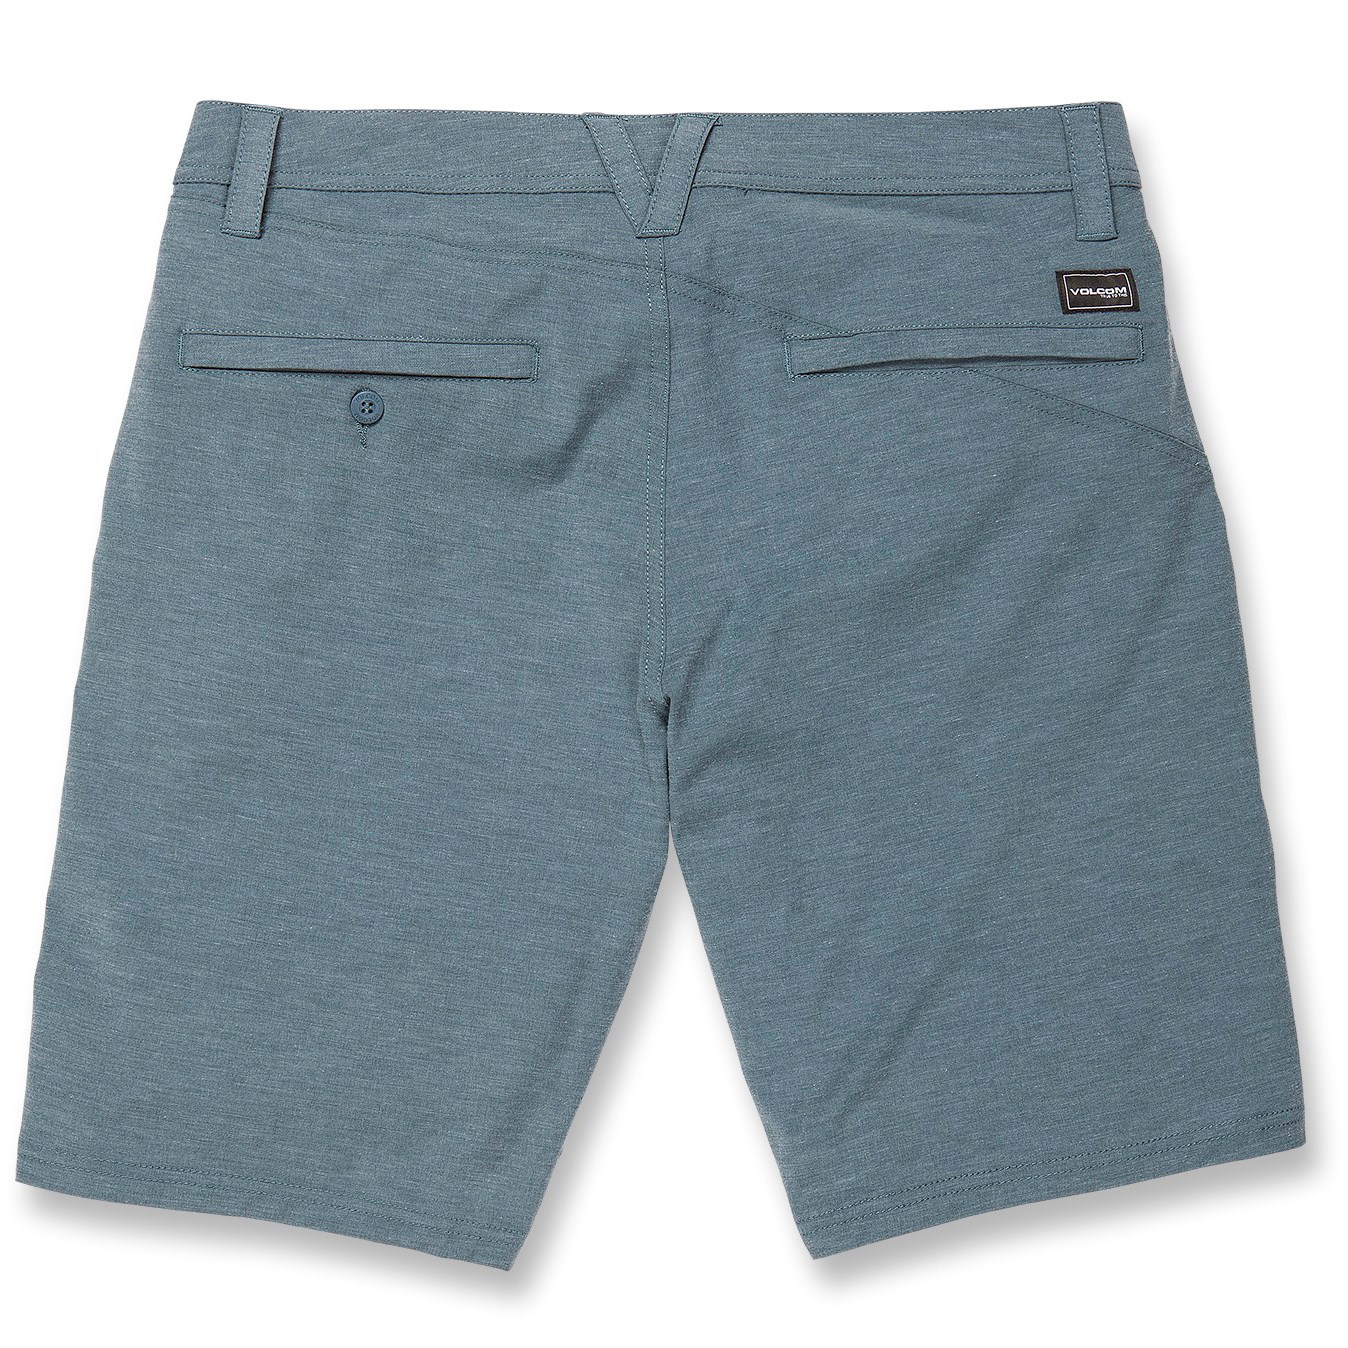 Volcom Frickin Cross Shred Static 20 Hybrid Shorts - Men's | evo